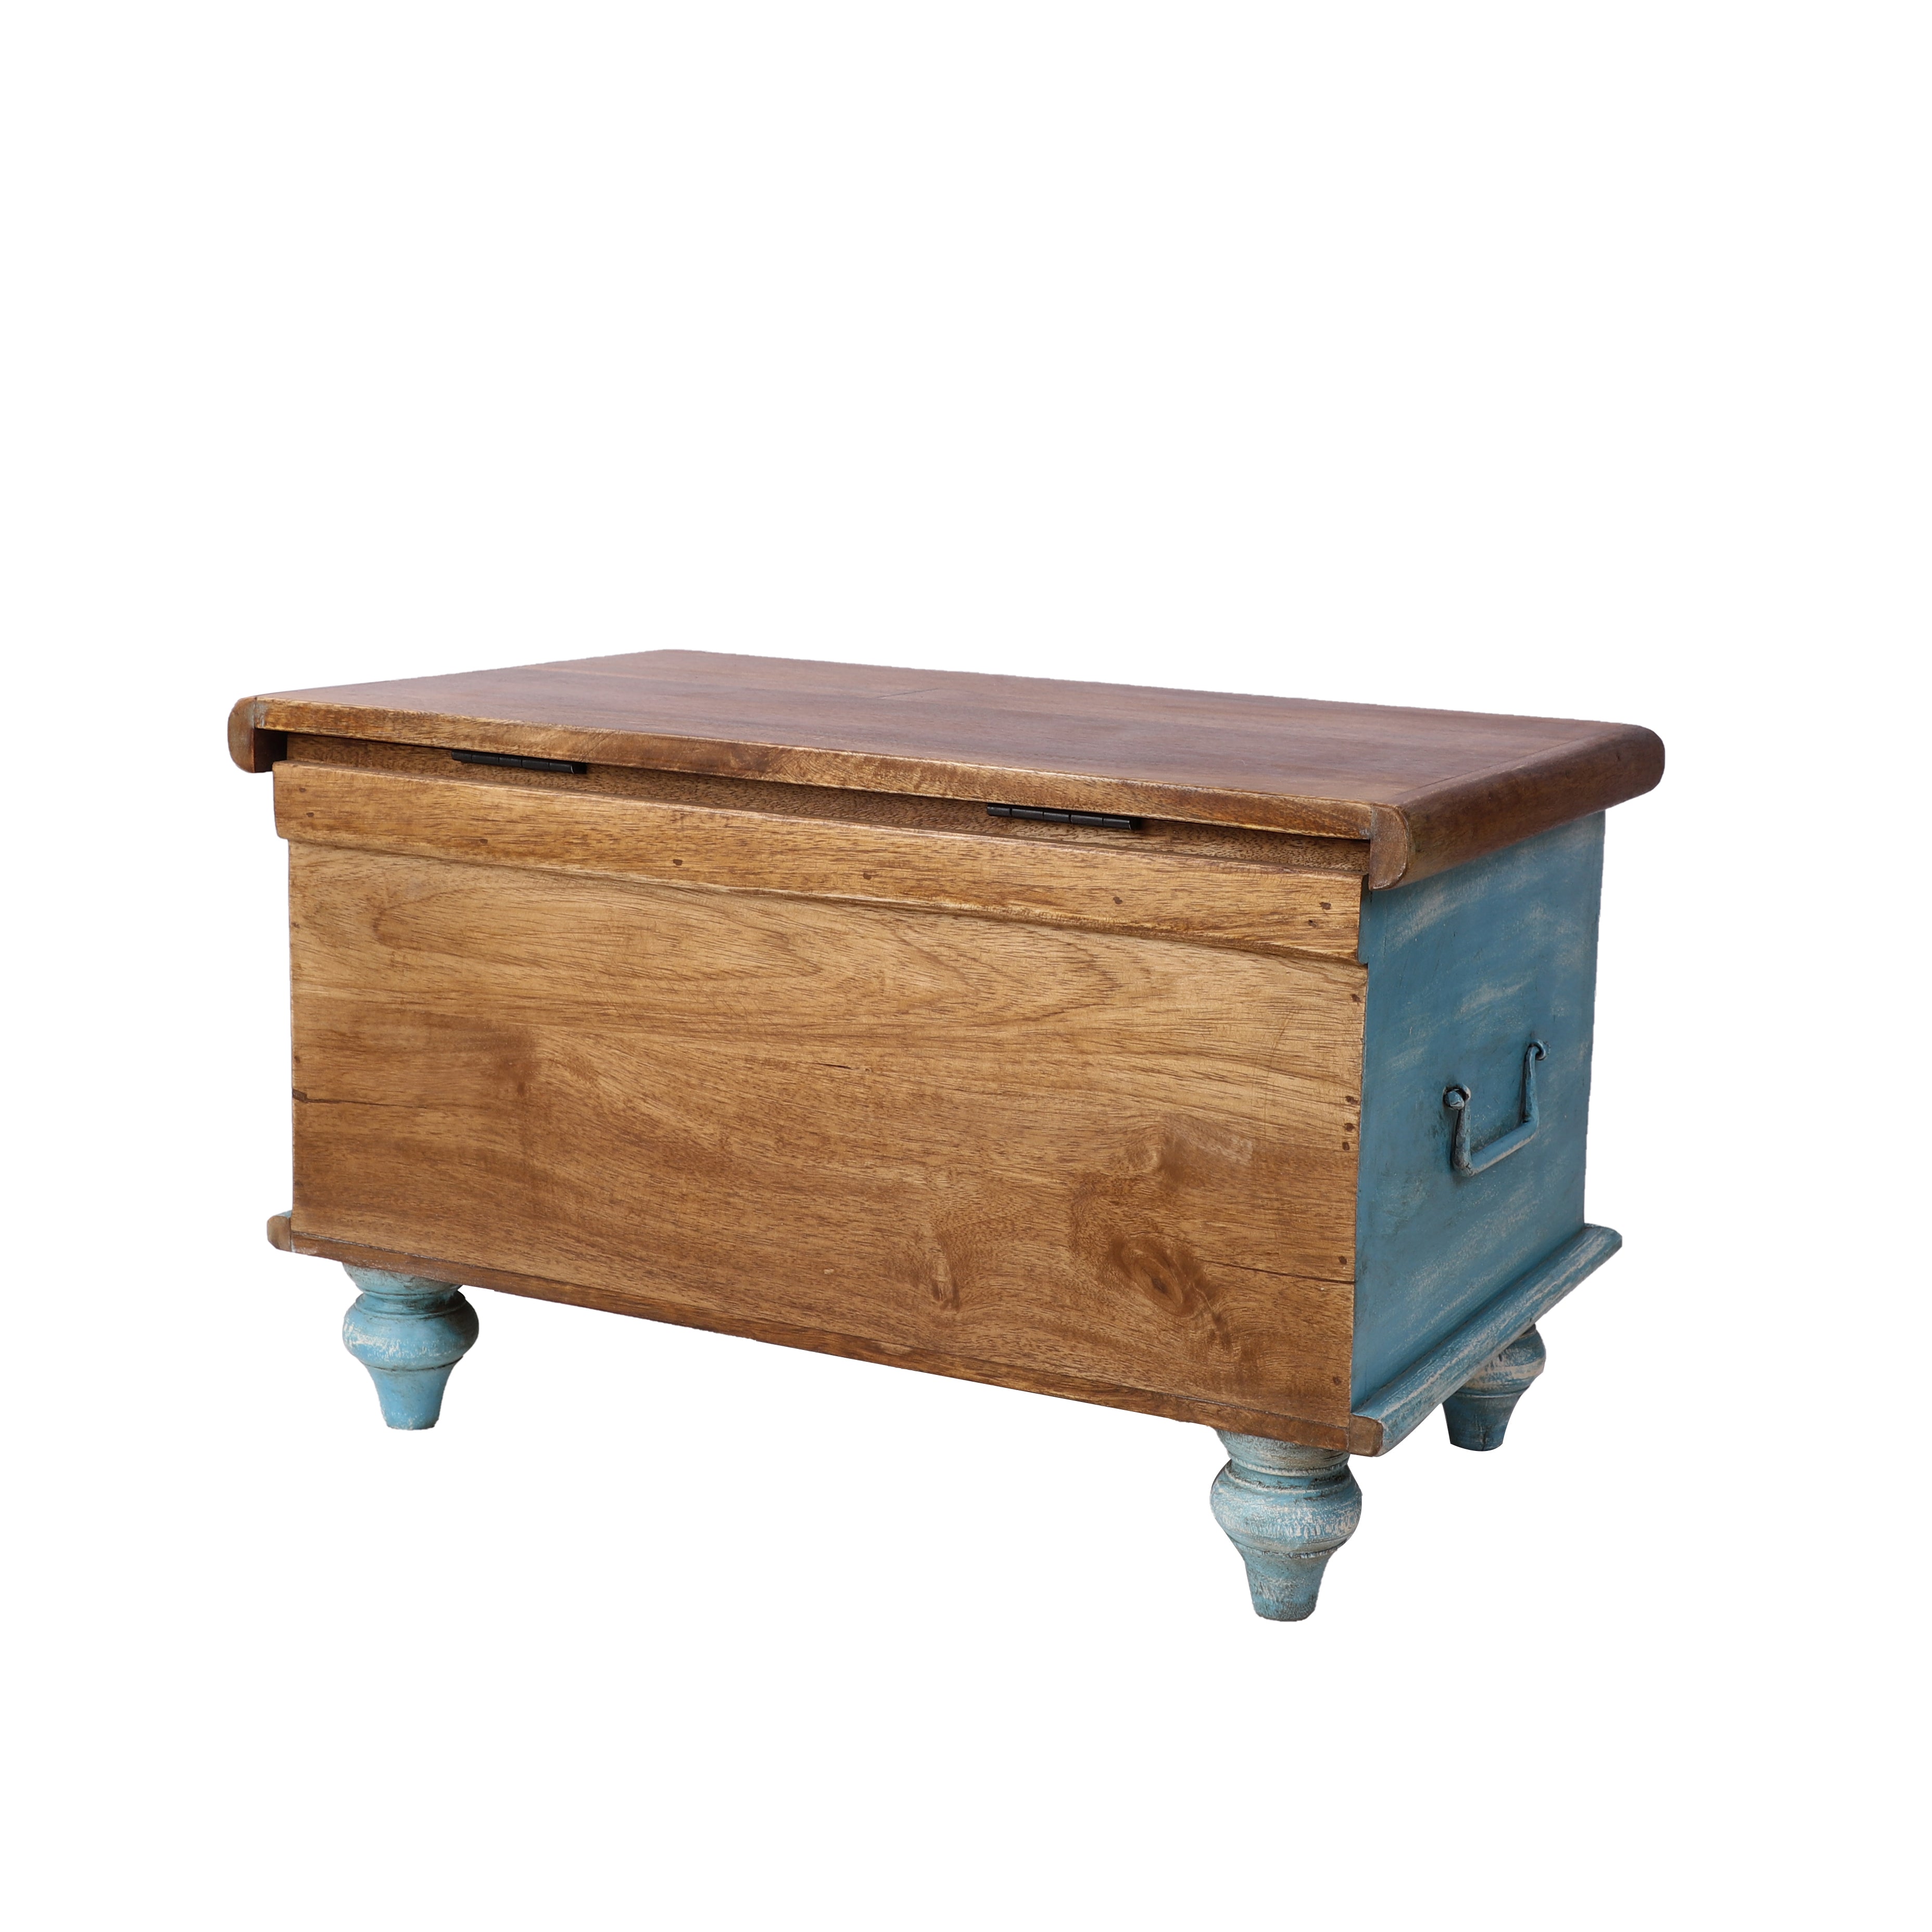 Carved Wooden Storage Box (Blue)